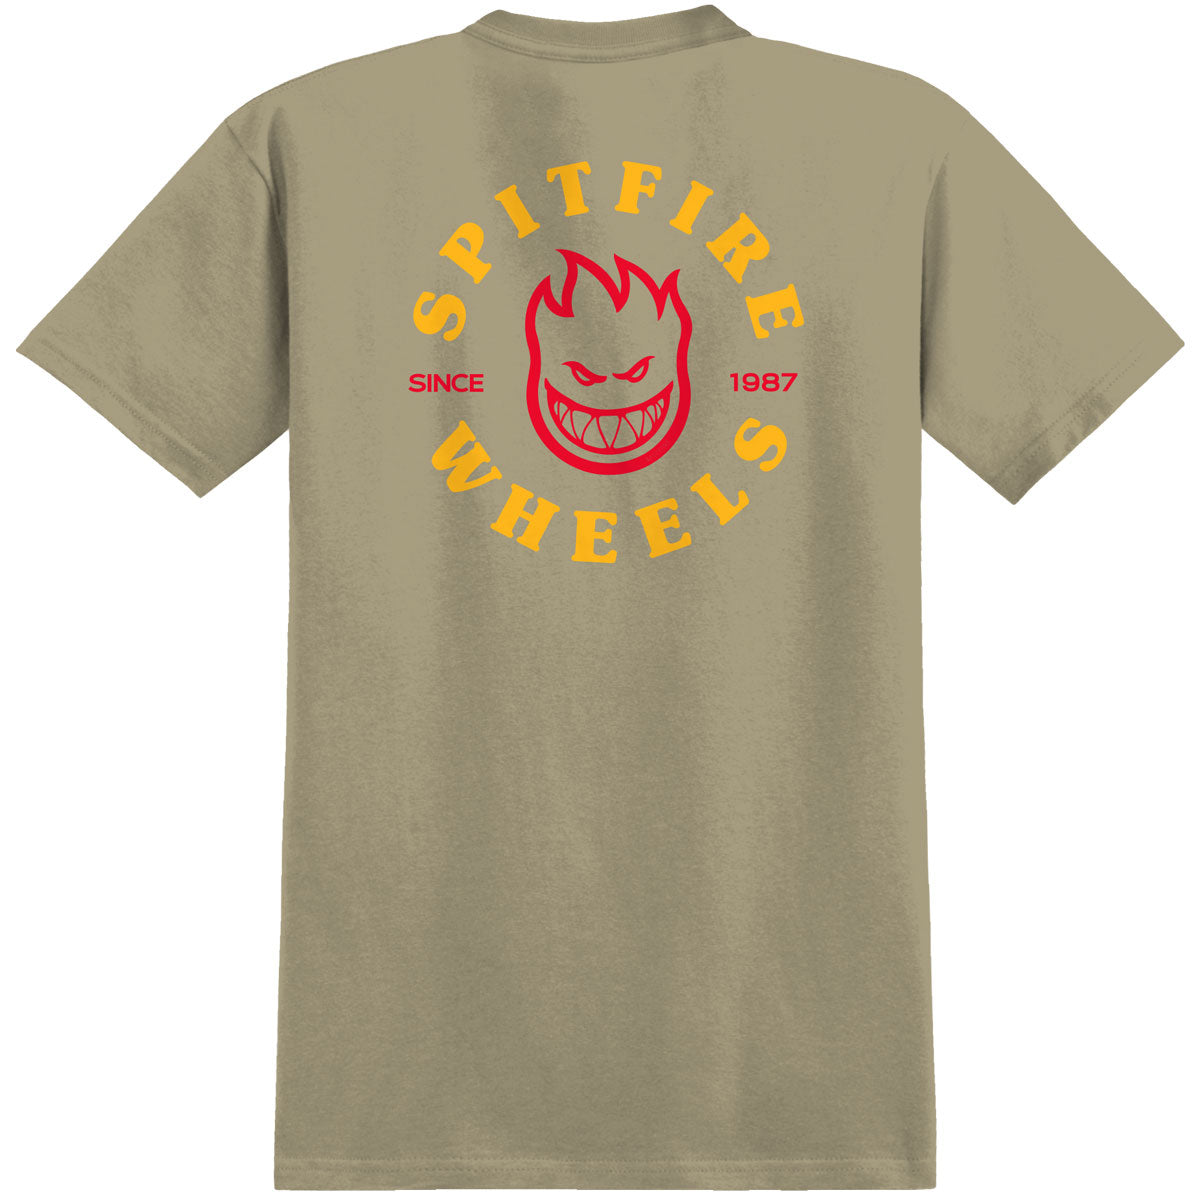 Spitfire Bighead Classic Pocket T-Shirt - Sand/Gold/Red image 2